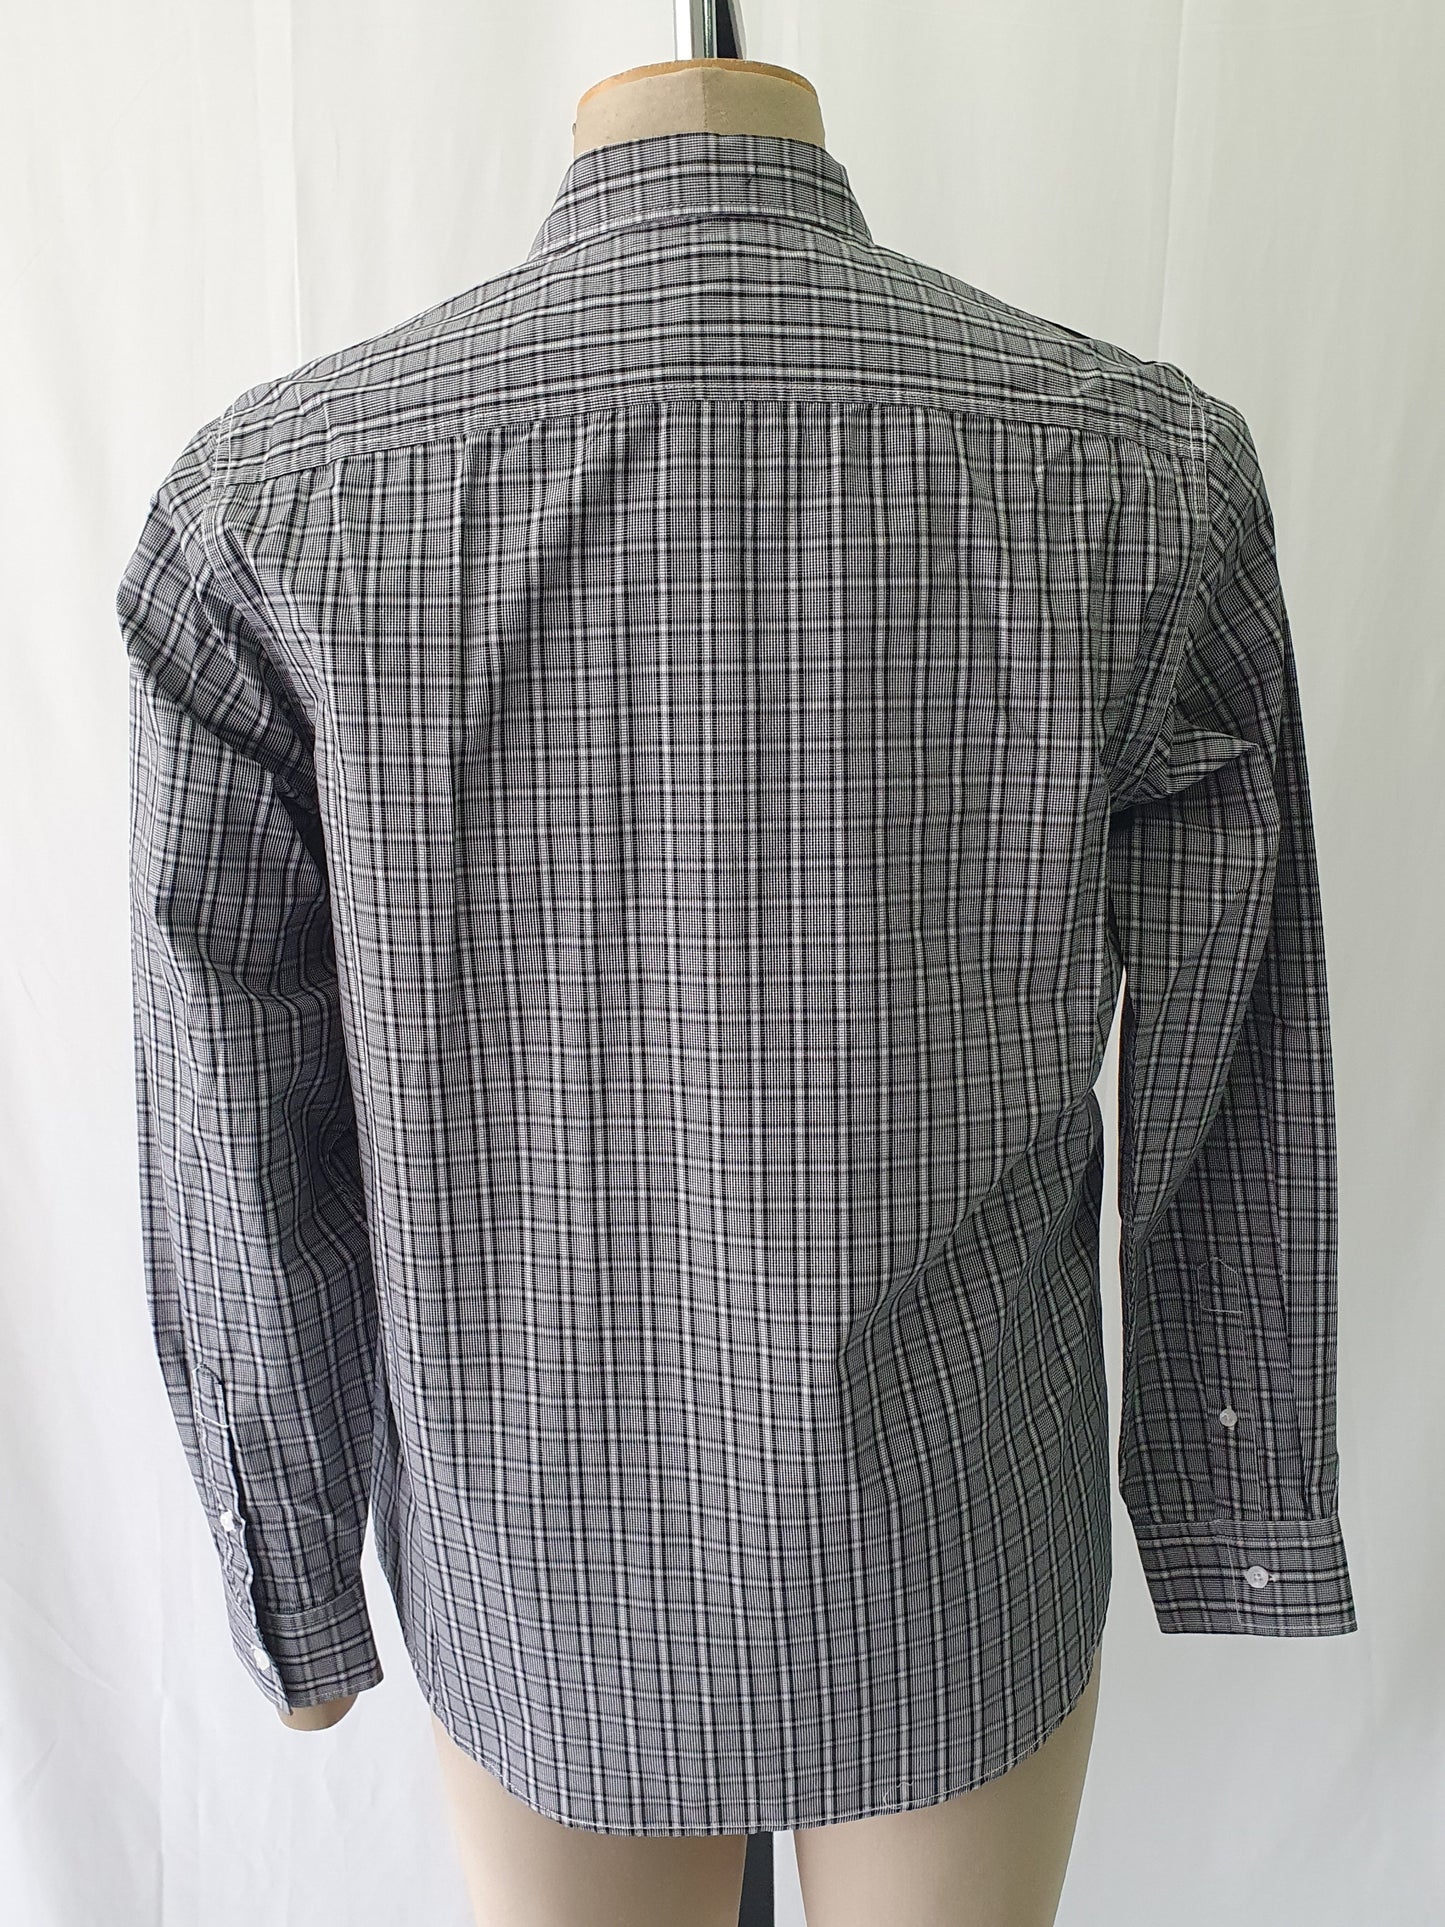 PW5856134 - Pelaco Grey check casual shirt - Regular Fit